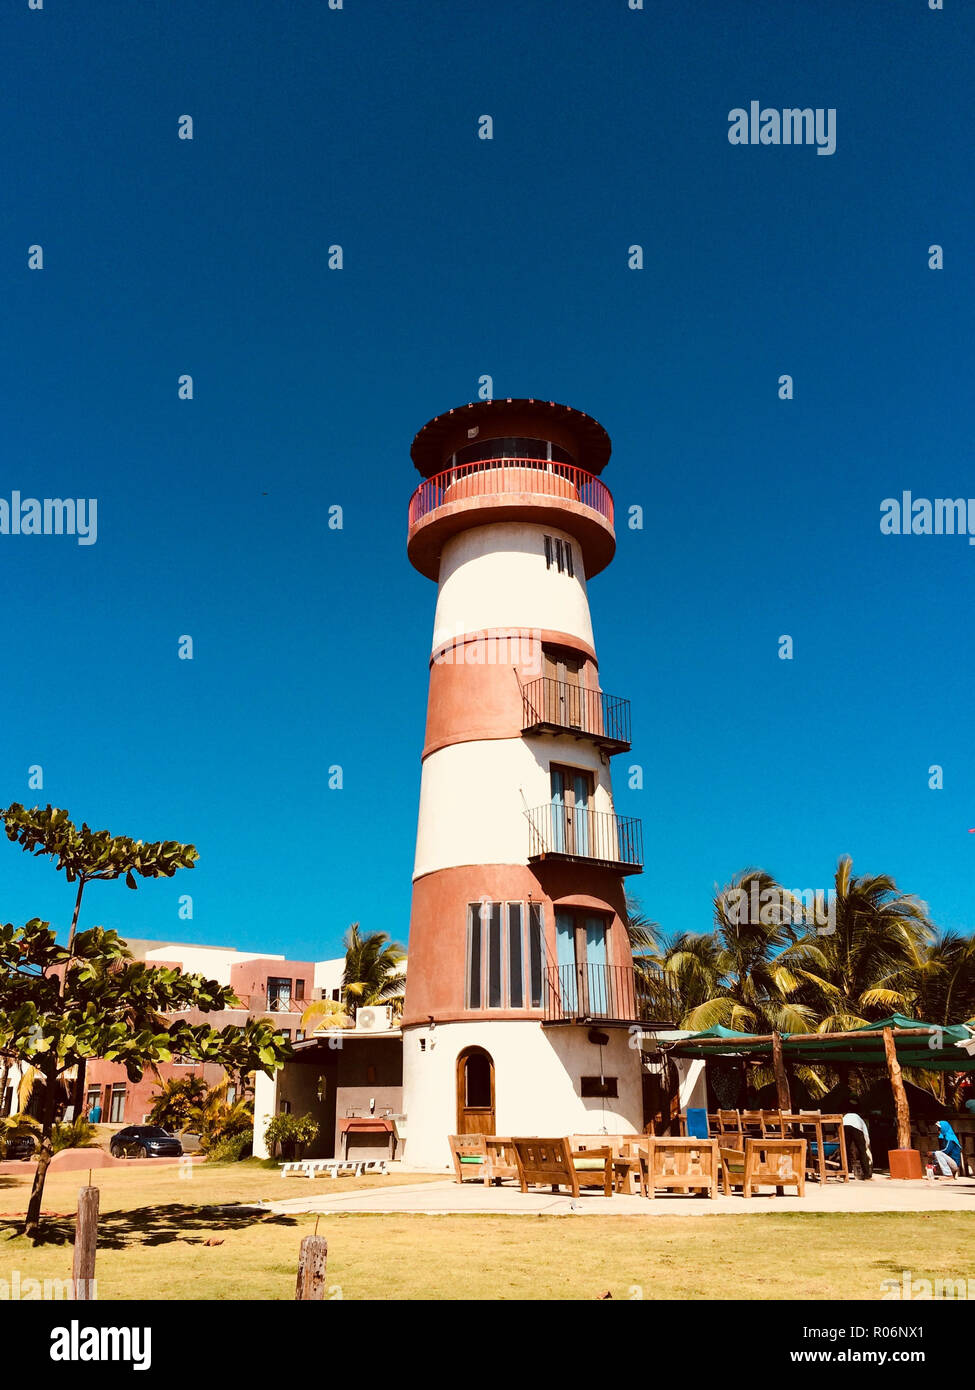 Playa Venao, Panama - mars 2018 : Hôtel El Sitio lighthouse tower at Playa Venao au Panama Banque D'Images